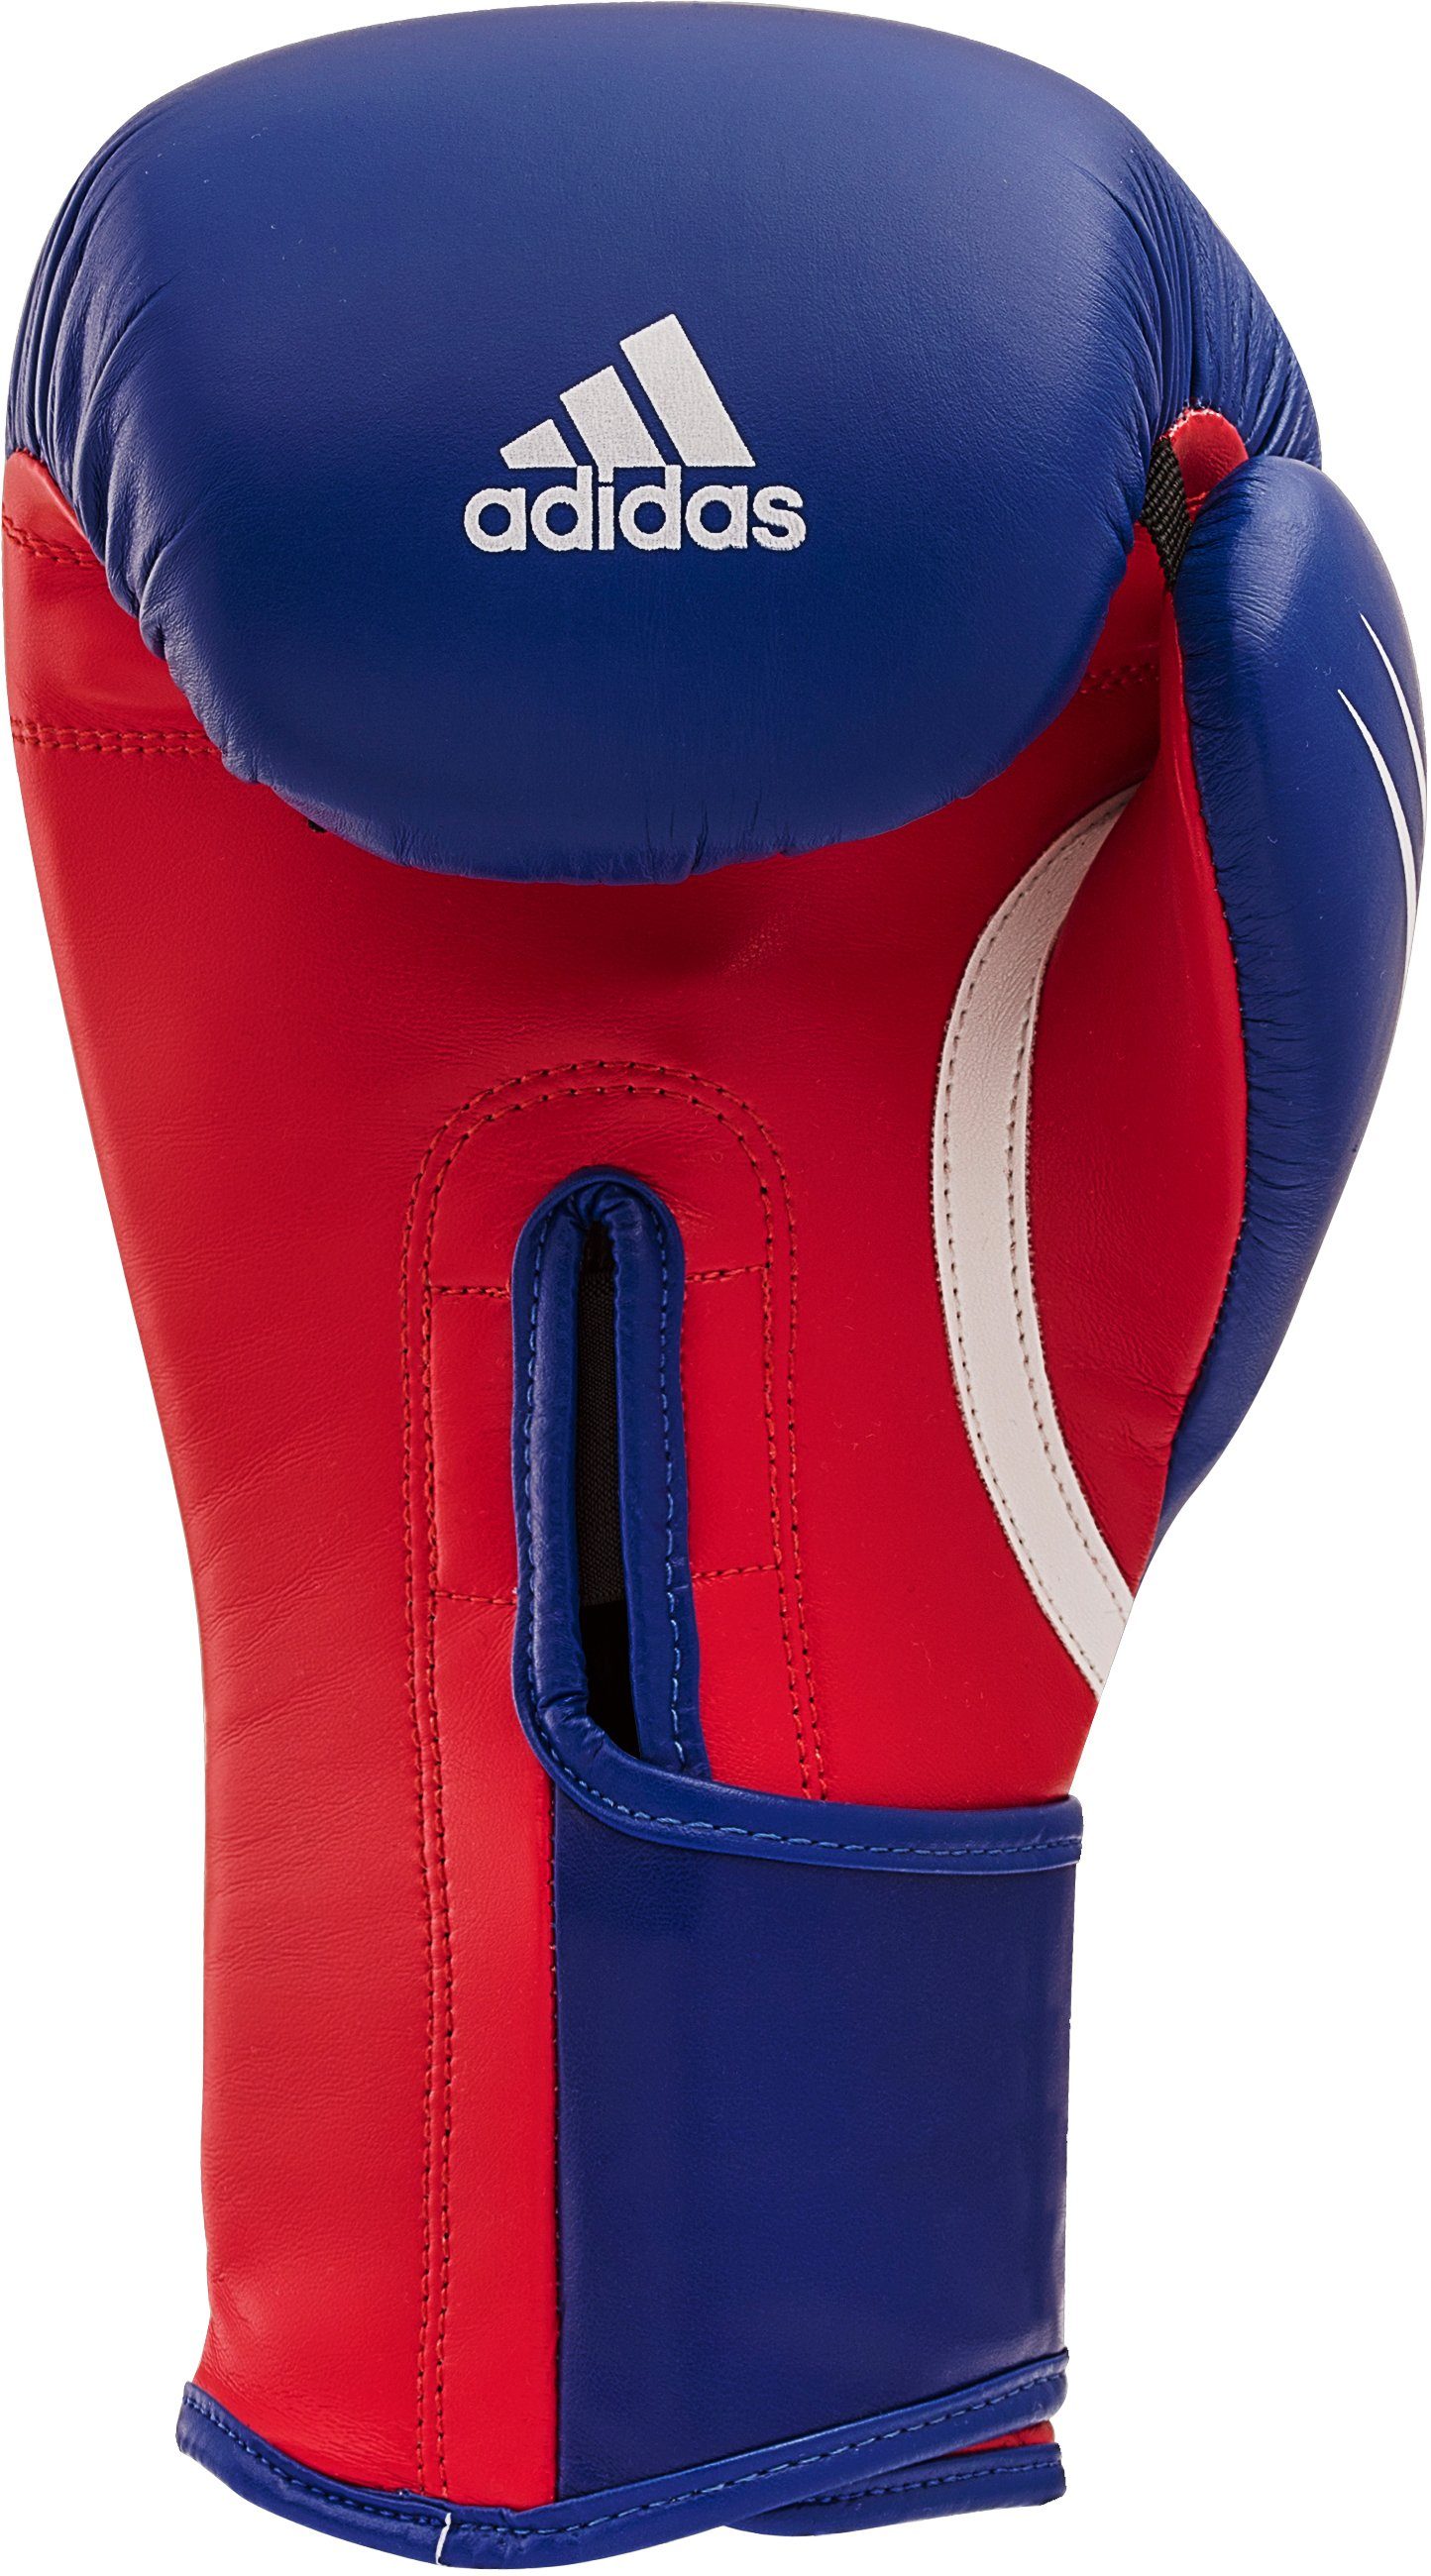 adidas Performance Boxhandschuhe blau/rot